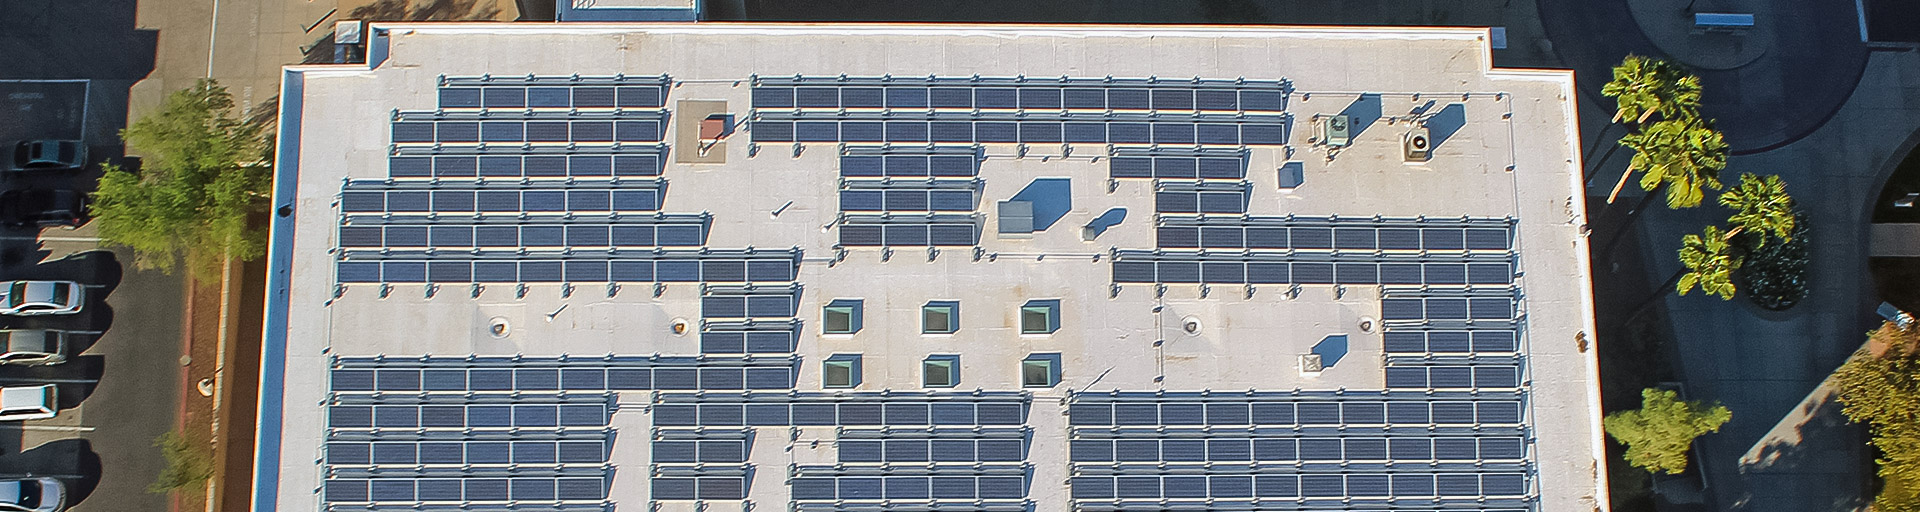 Design South solar panels - aerial